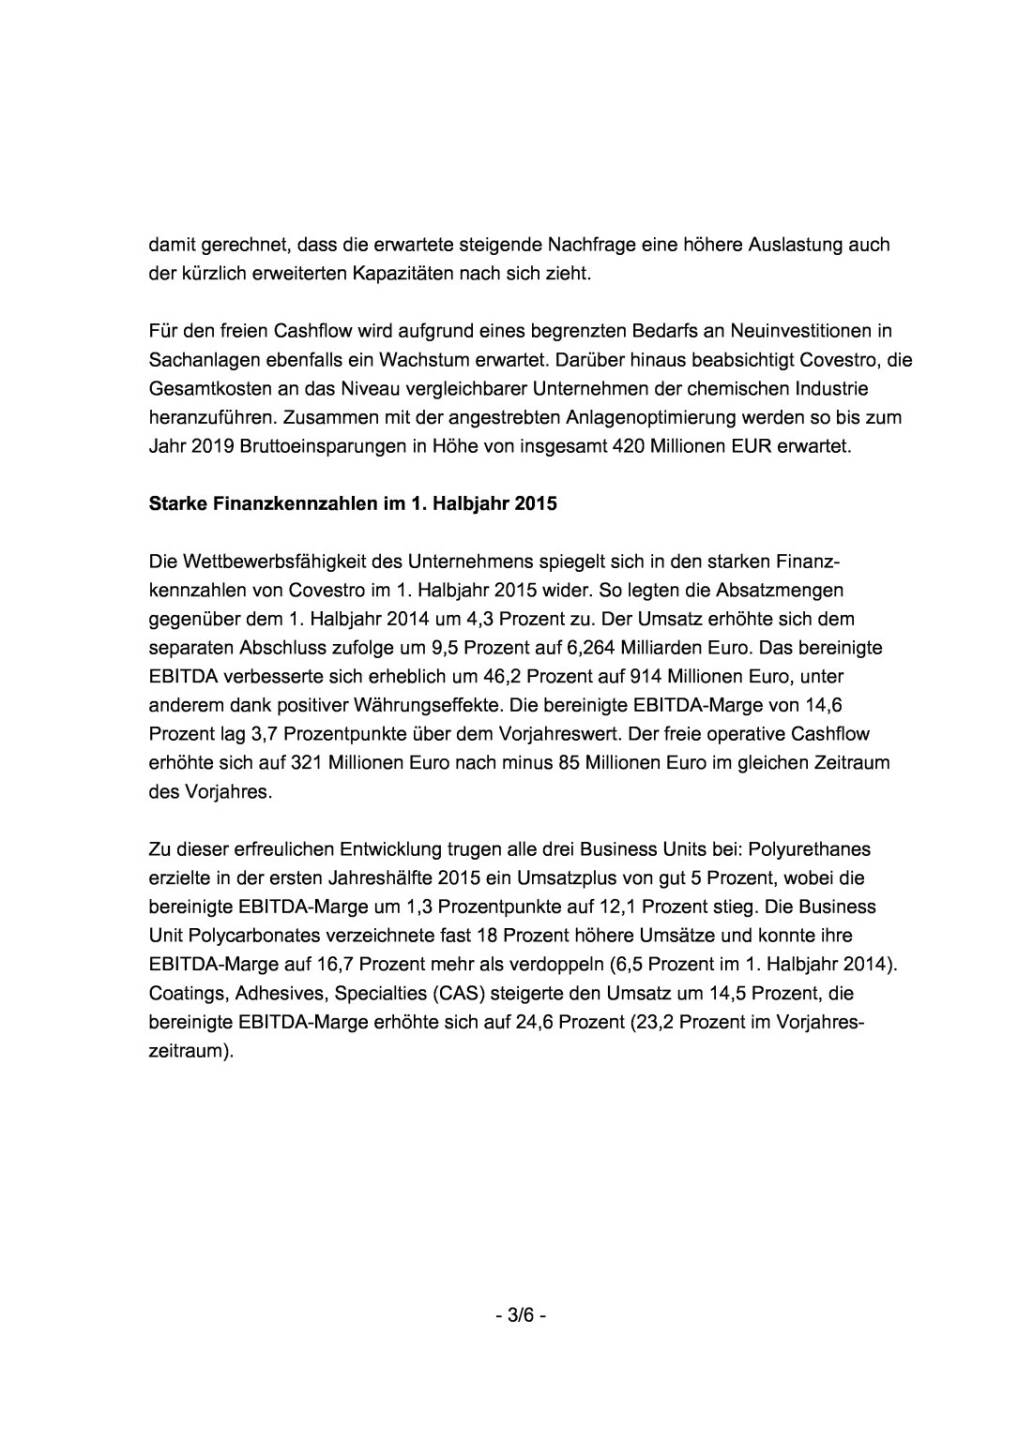 Bayer plant IPO für Covestro, Seite 3/6, komplettes Dokument unter http://boerse-social.com/static/uploads/file_349_bayer_plant_ipo_fur_covestro.pdf